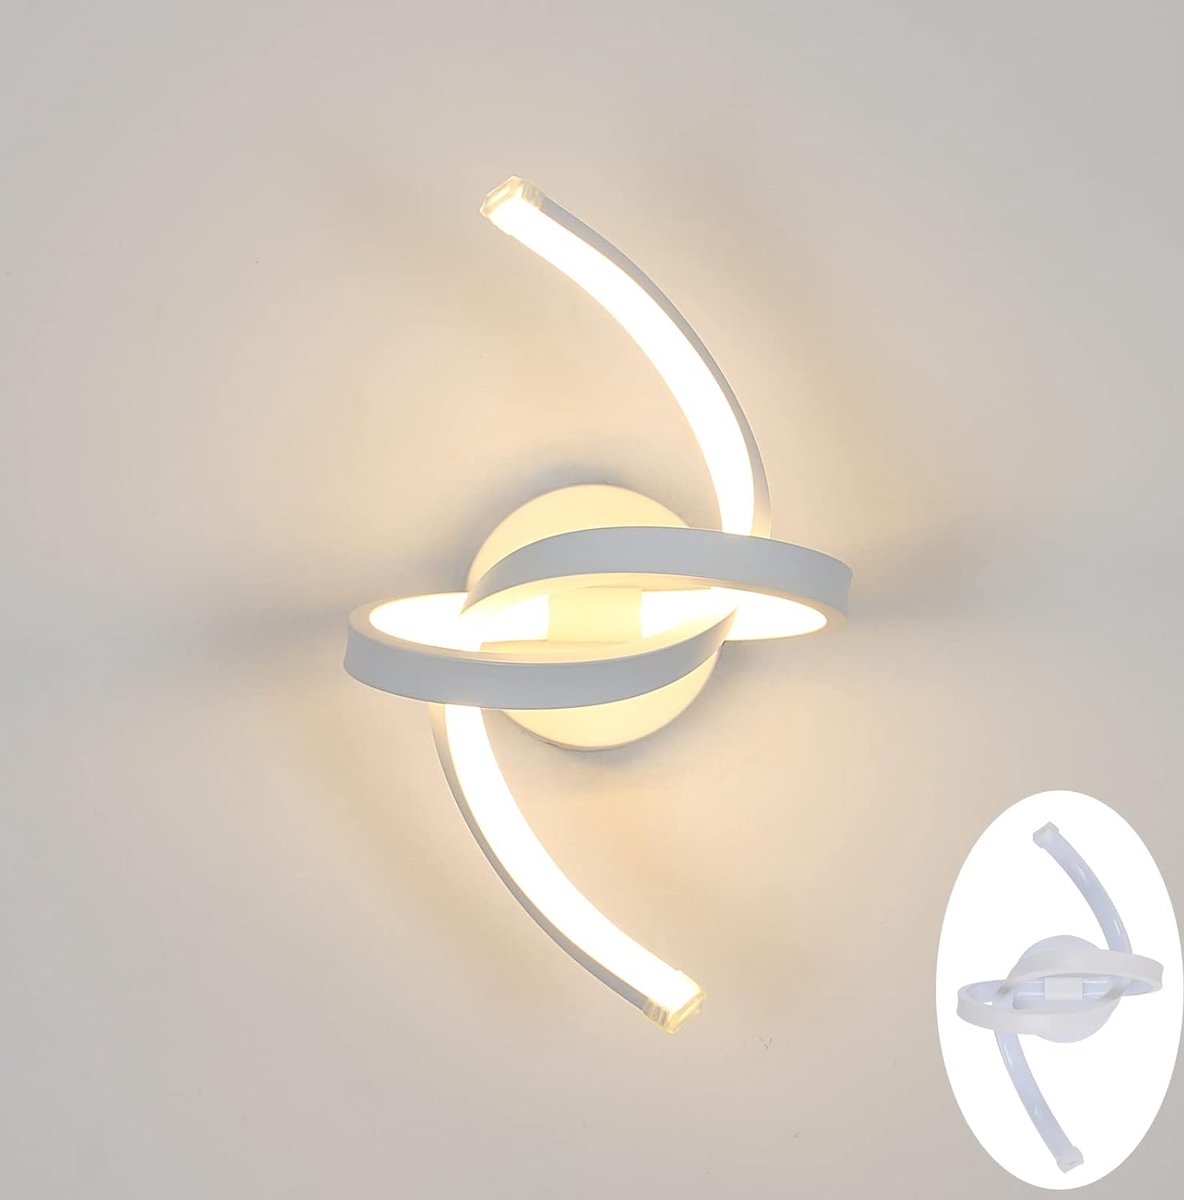 Goeco wandlamp - 32cm - Medium -18W - LED - 3000K - spiraalvormig ontwerp